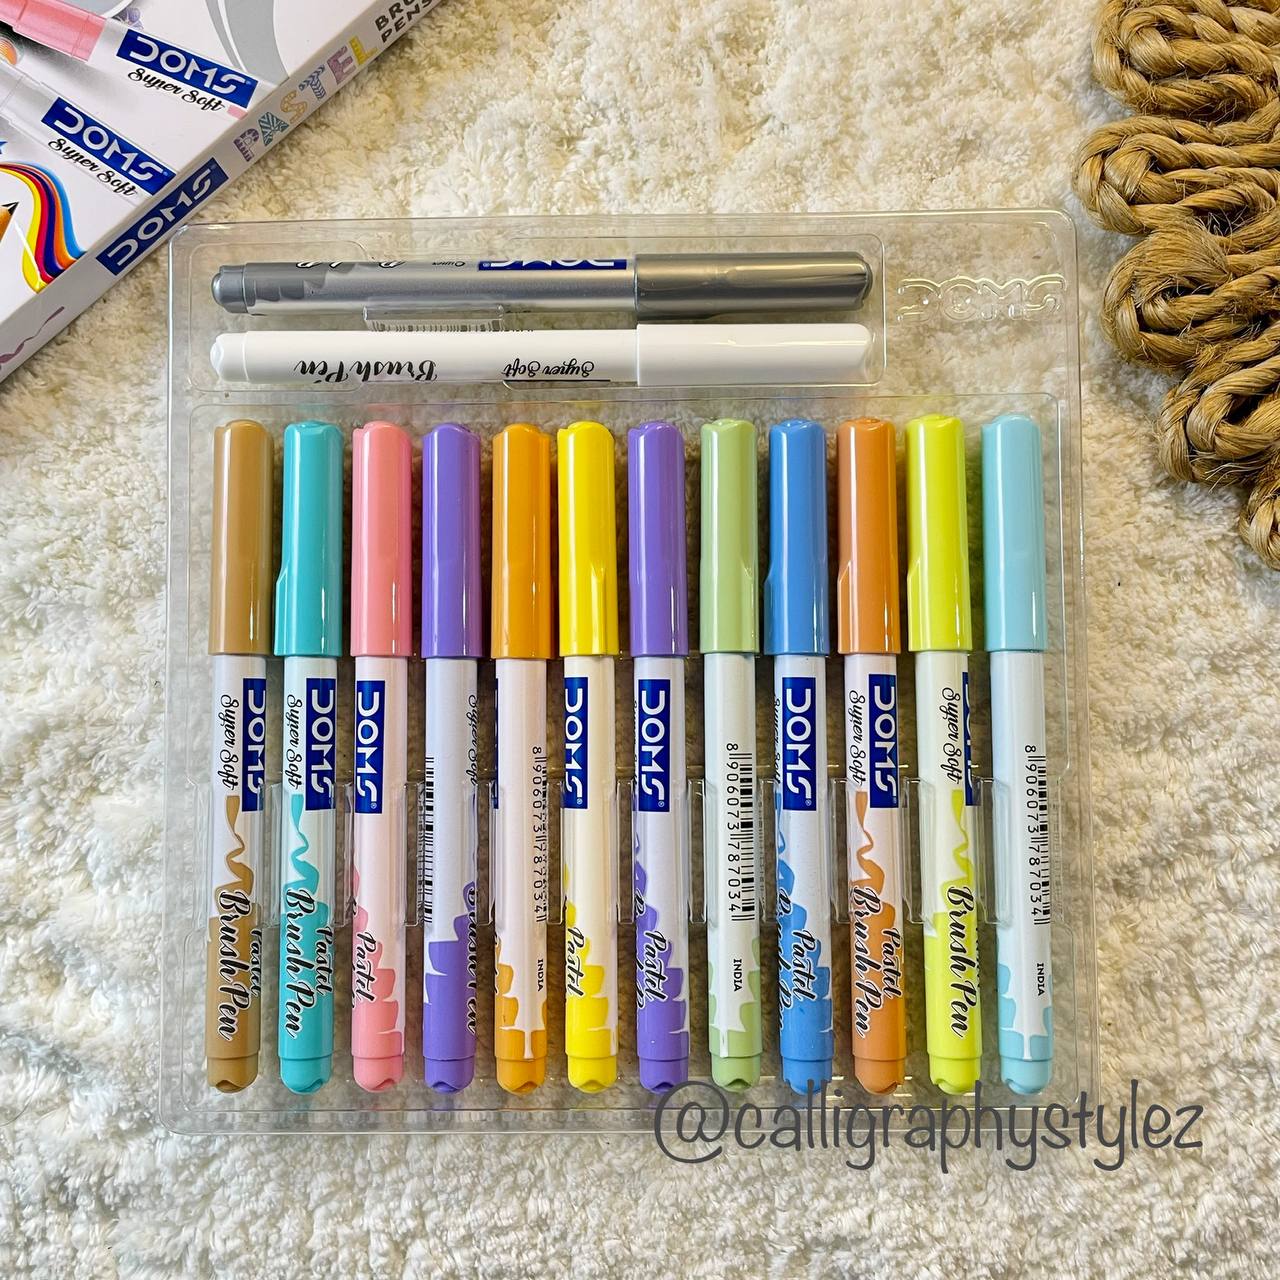 DOMS Metallic Brush Pen (10 Shades) Super soft